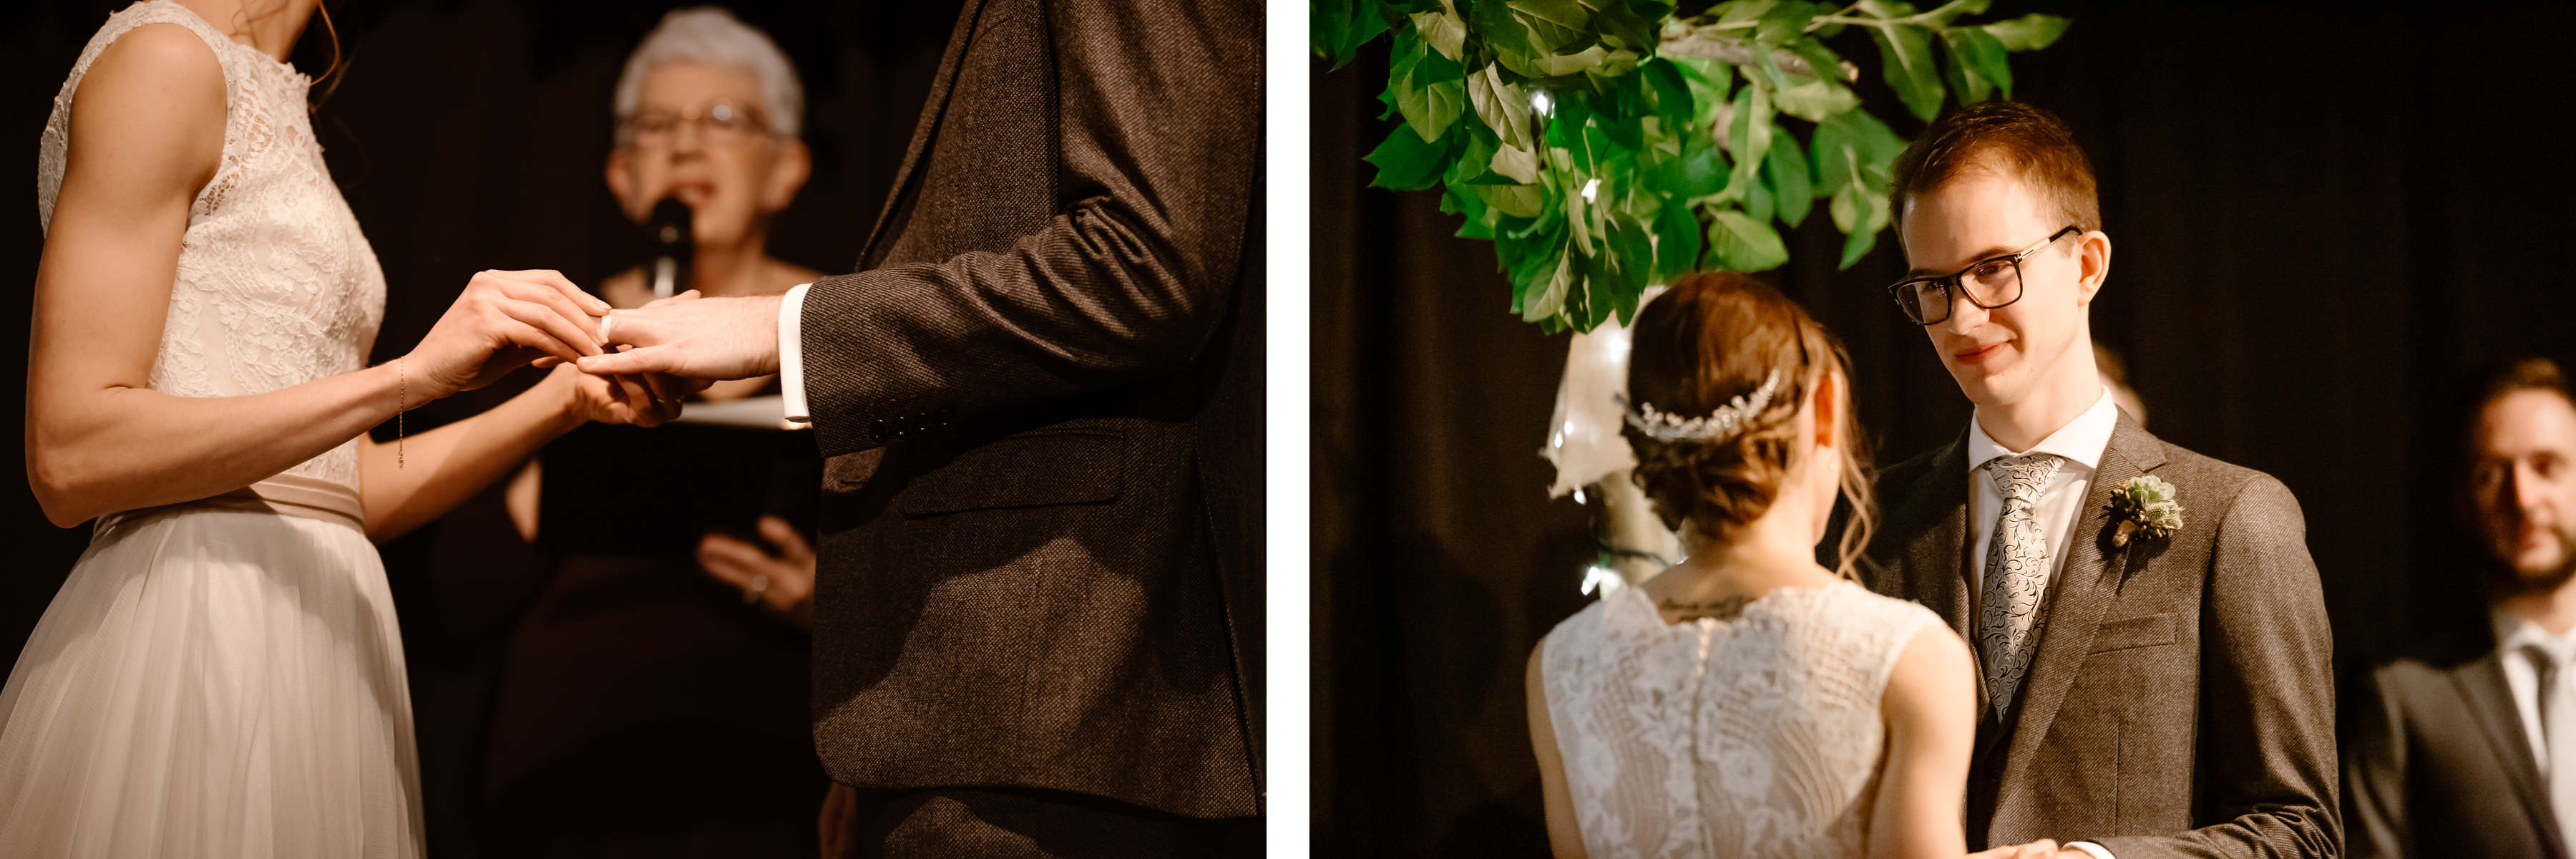 Cornerstone Theatre Wedding Photographers in Canmore - Photo 27